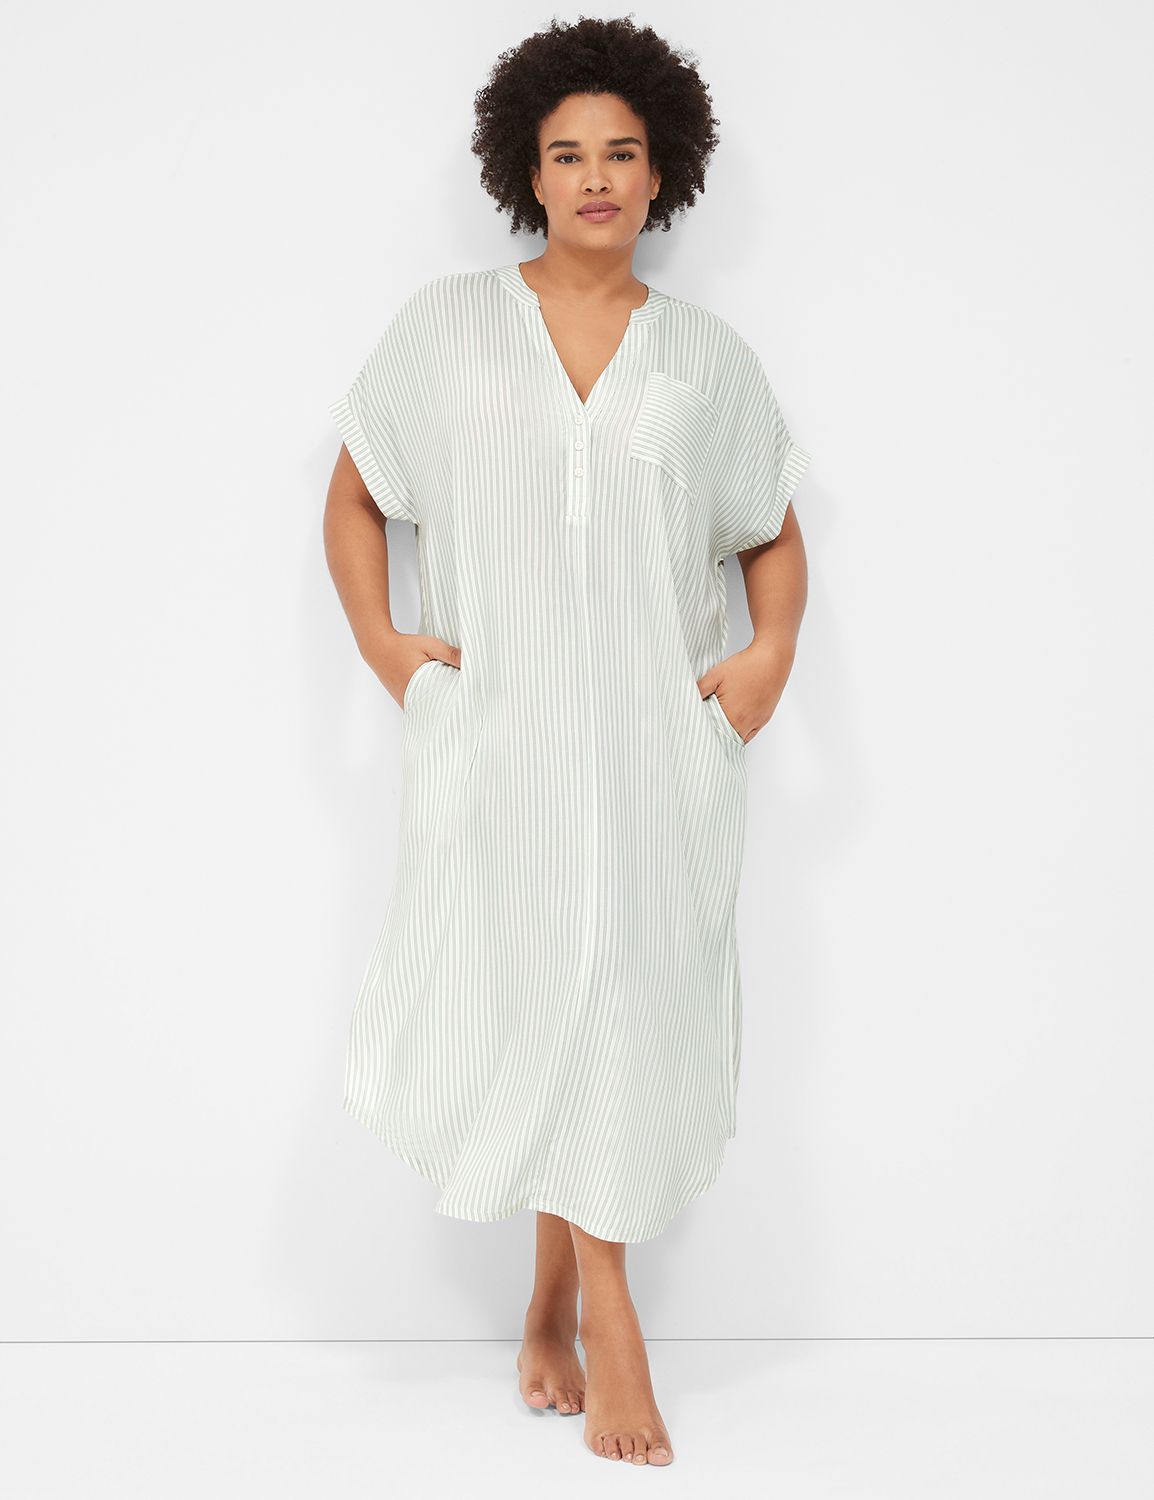 Woven Plus Size Pajamas, Sleepwear & Loungewear